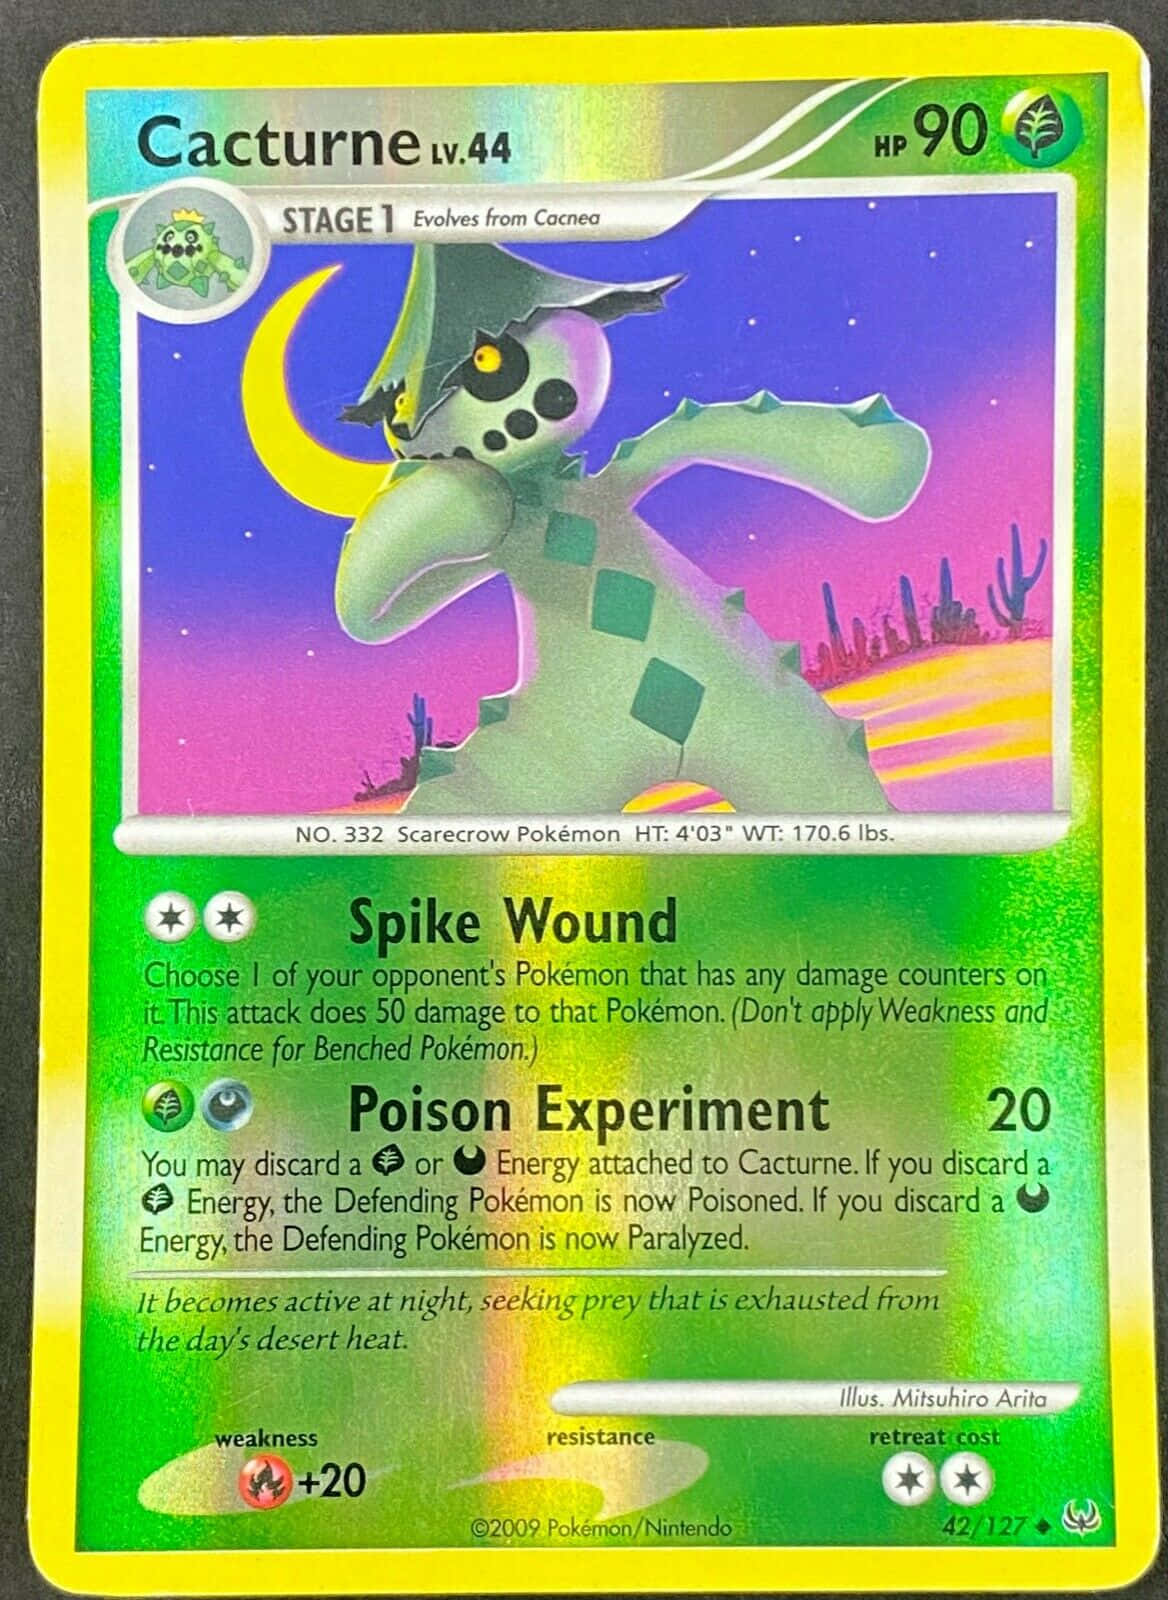 Cacturne Pokémon Card Wallpaper